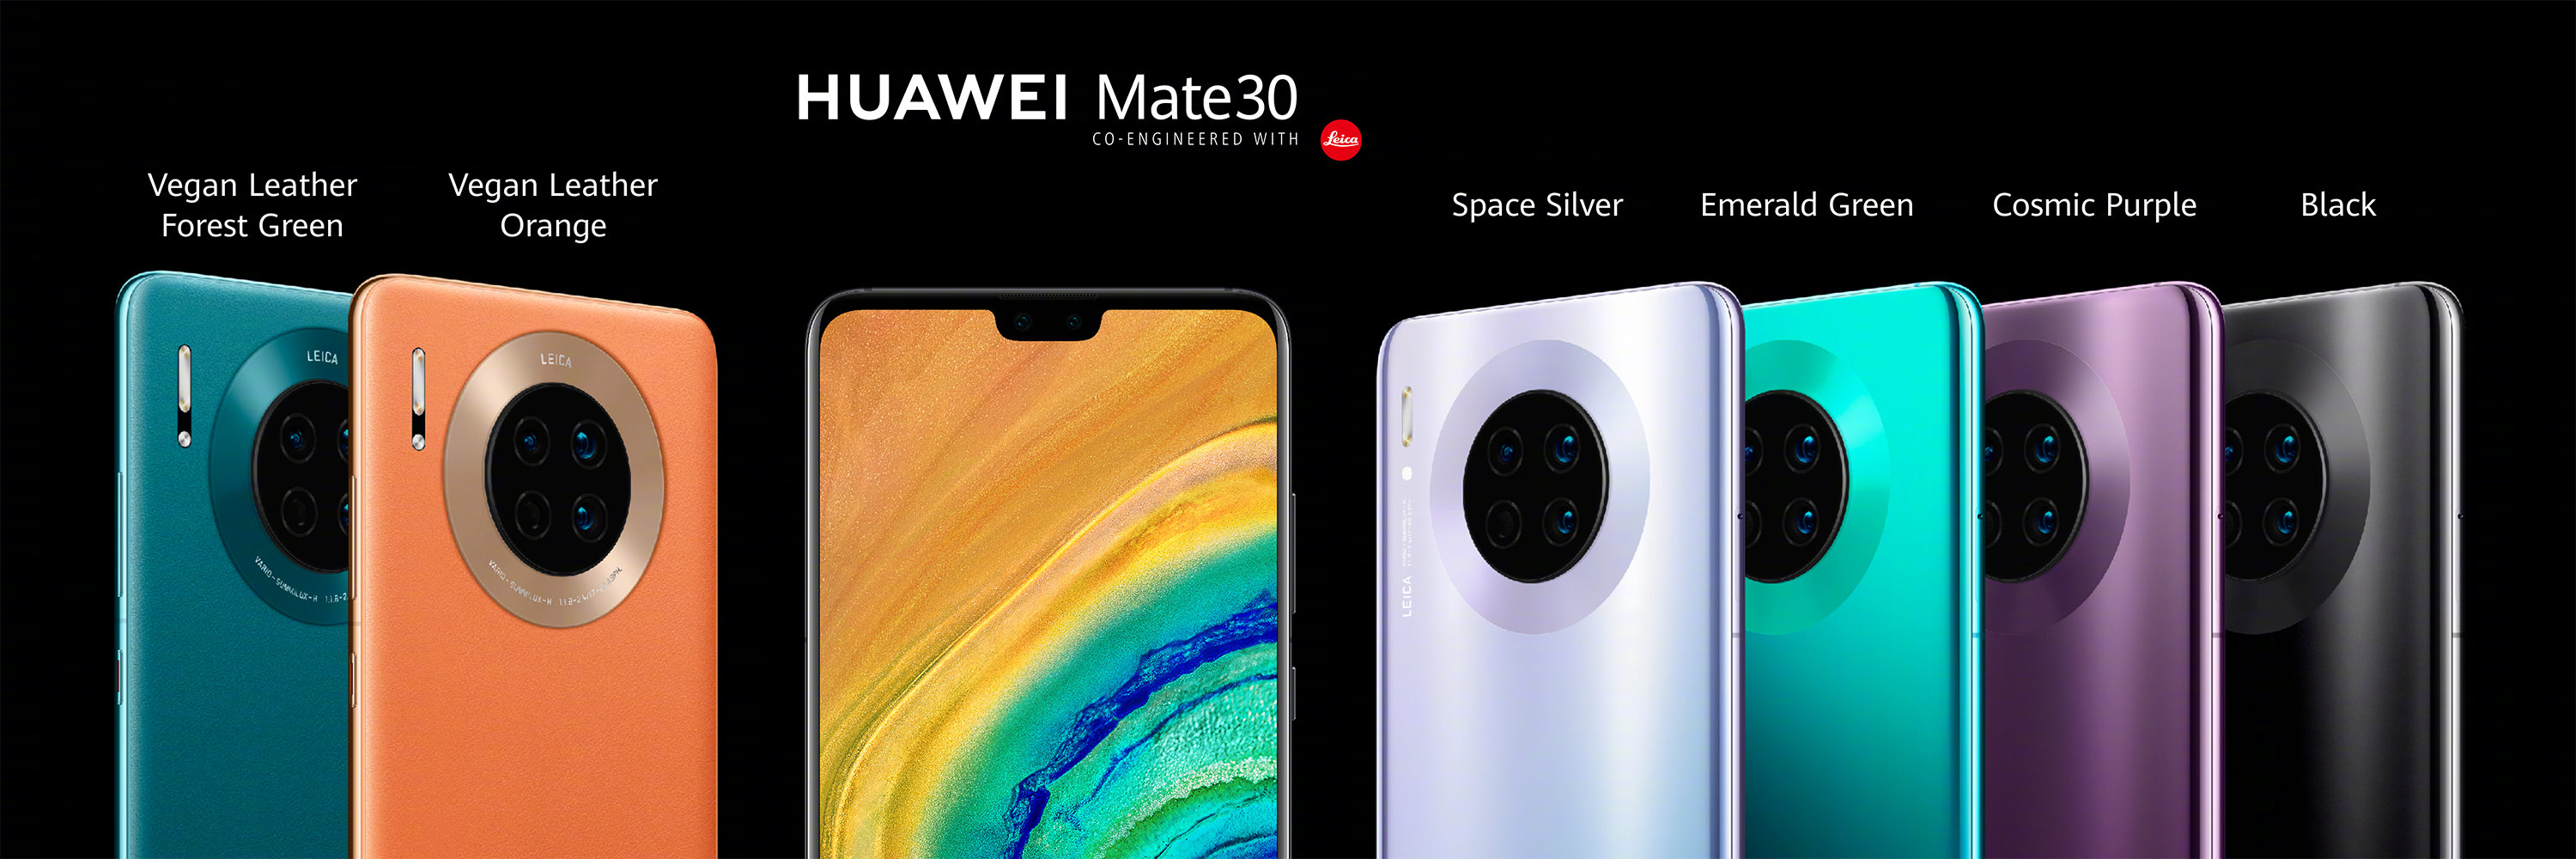 Huawei-mate-30-seires-1-img-1.jpg